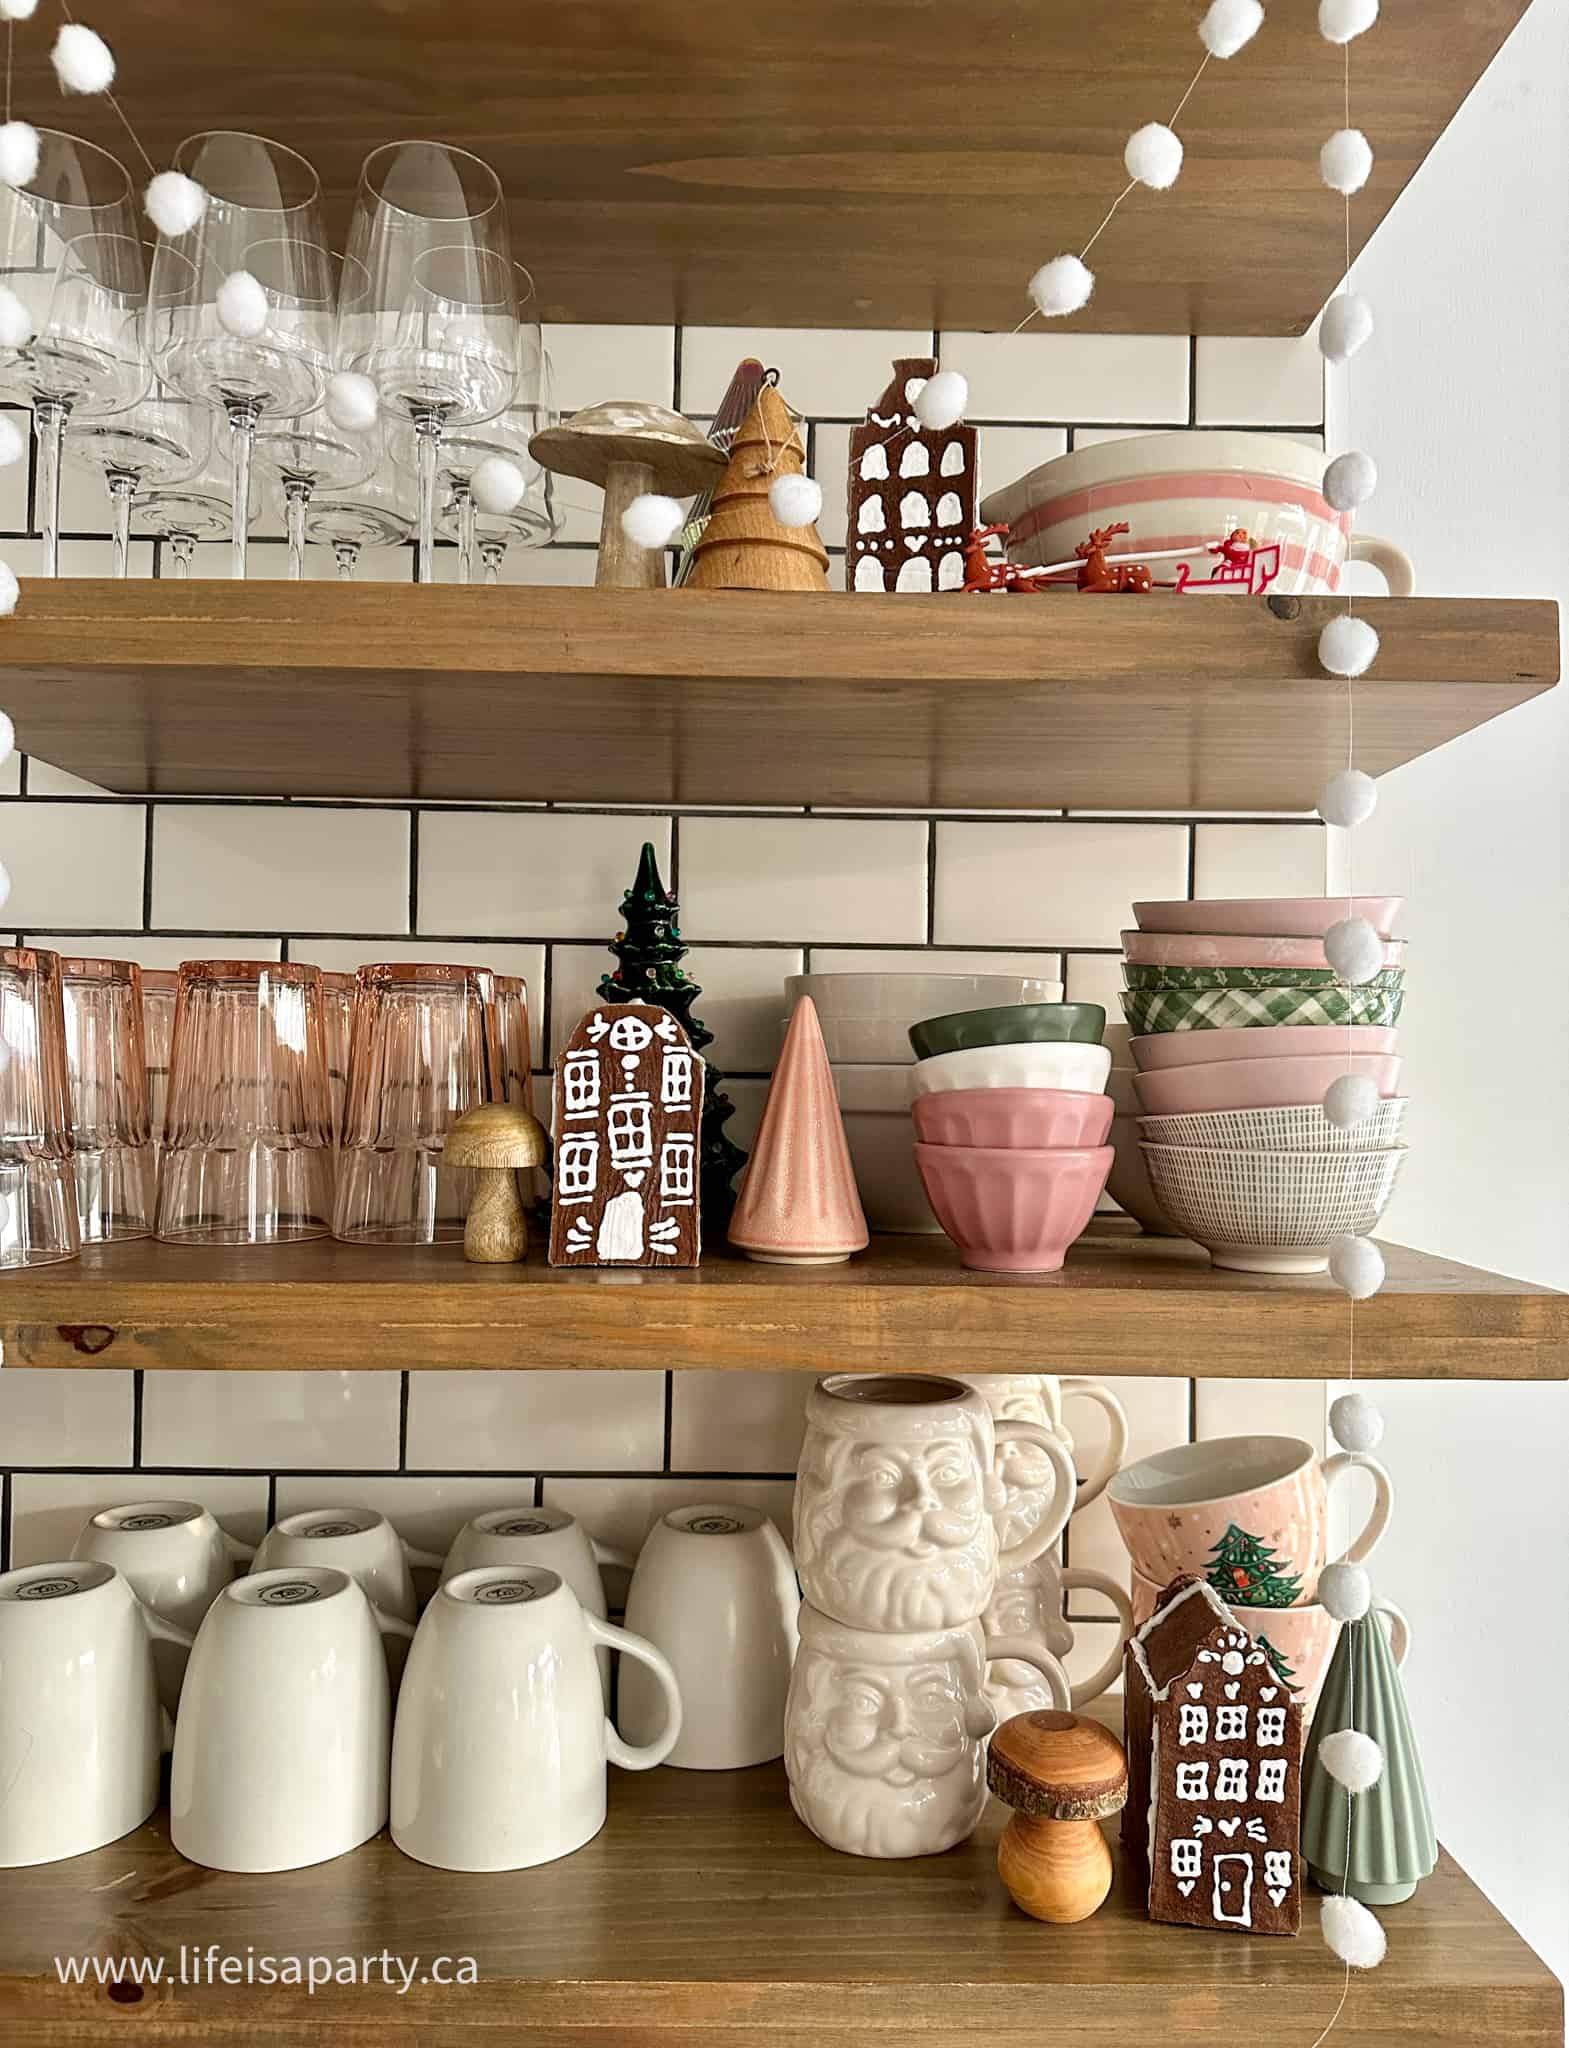 cottagecore Christmas kitchen shelves